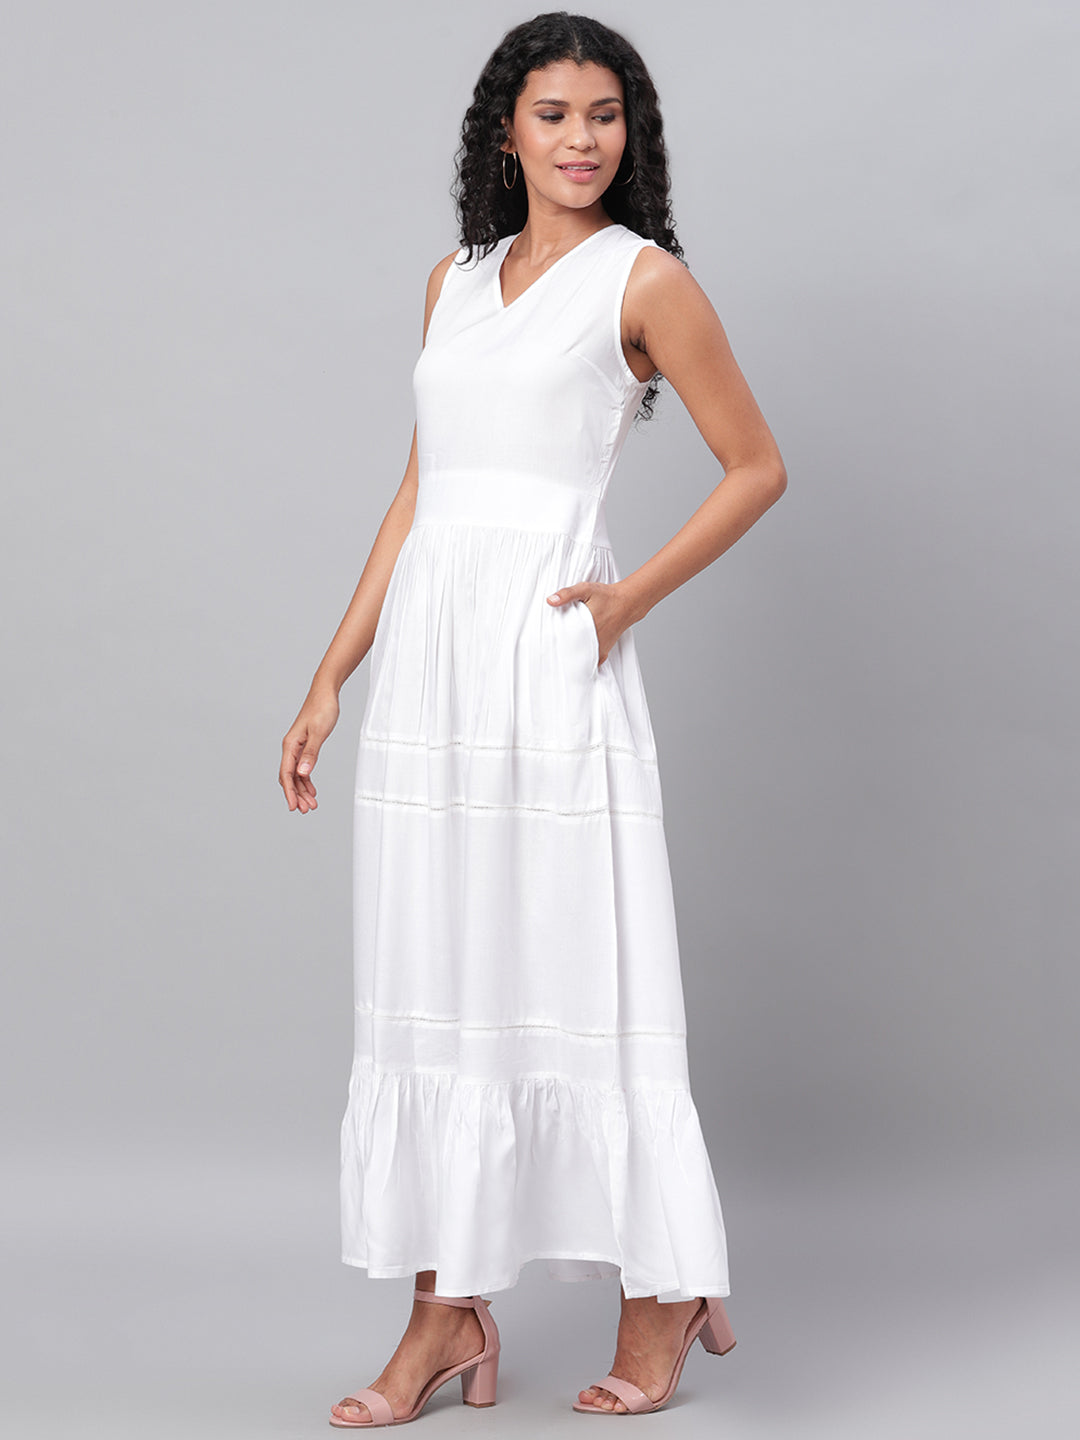 Myshka Women's White Solid Sleeveless Cotton V Neck Casual Dress